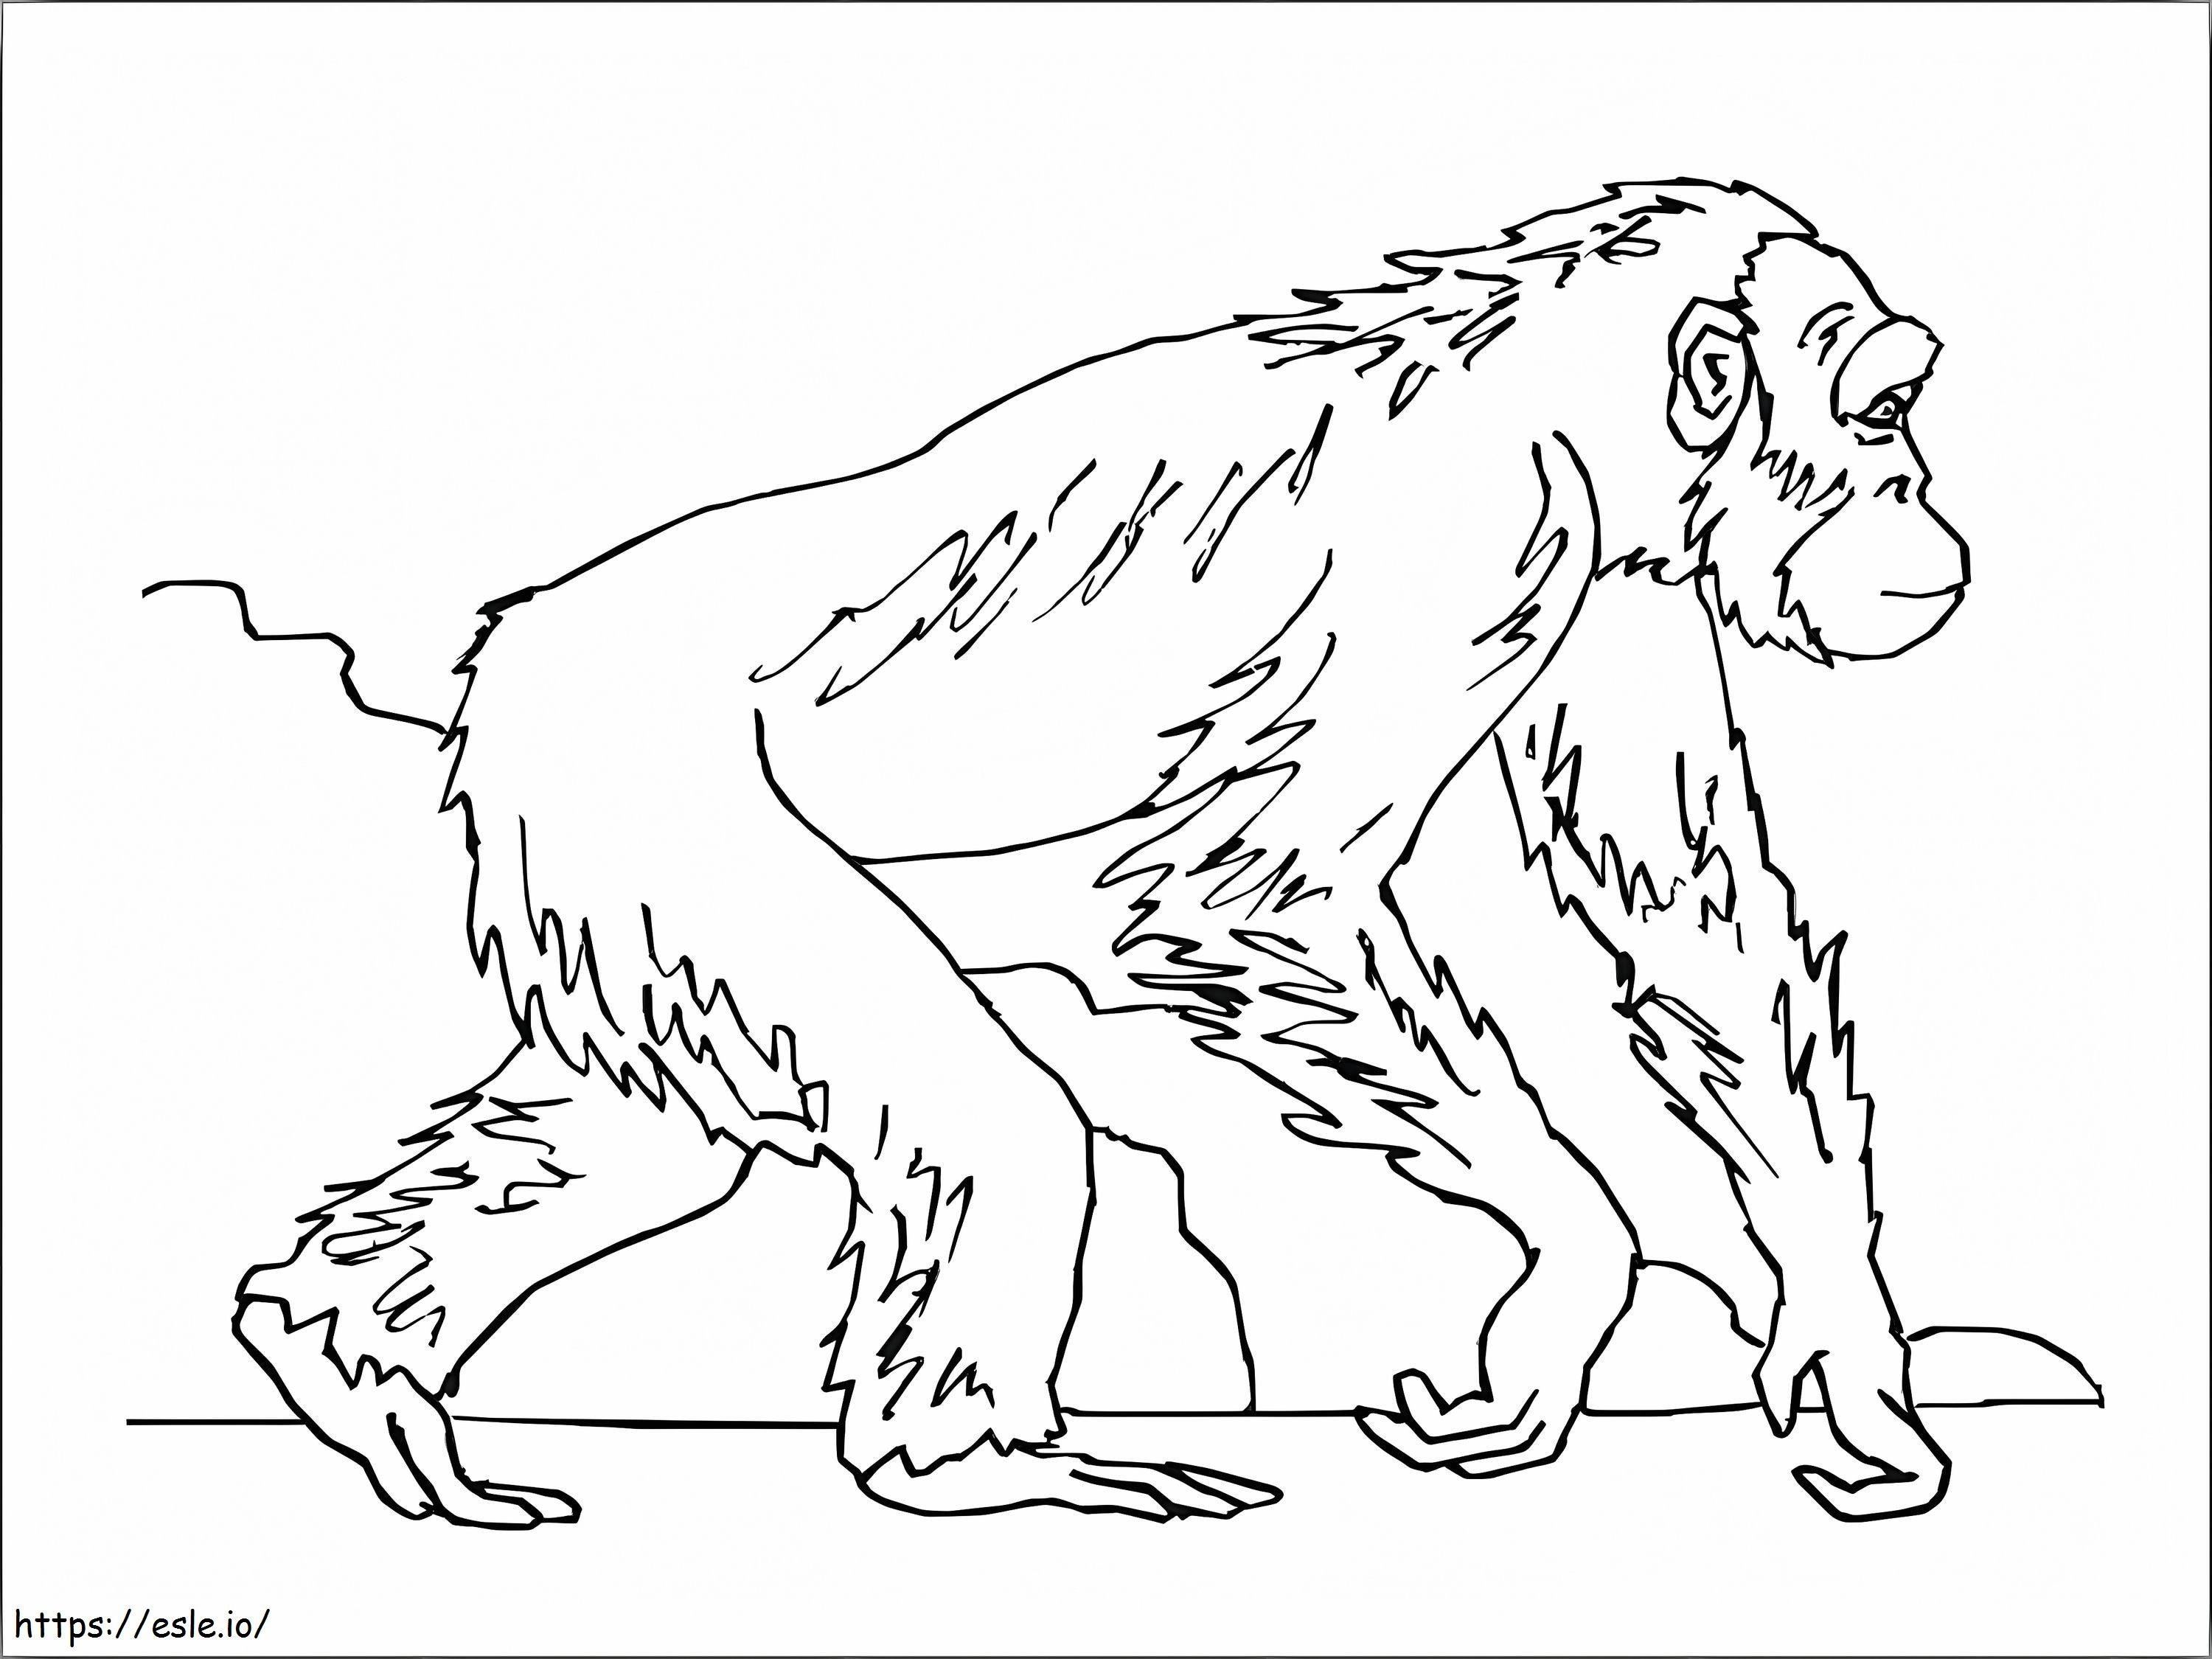 Walking Ape coloring page